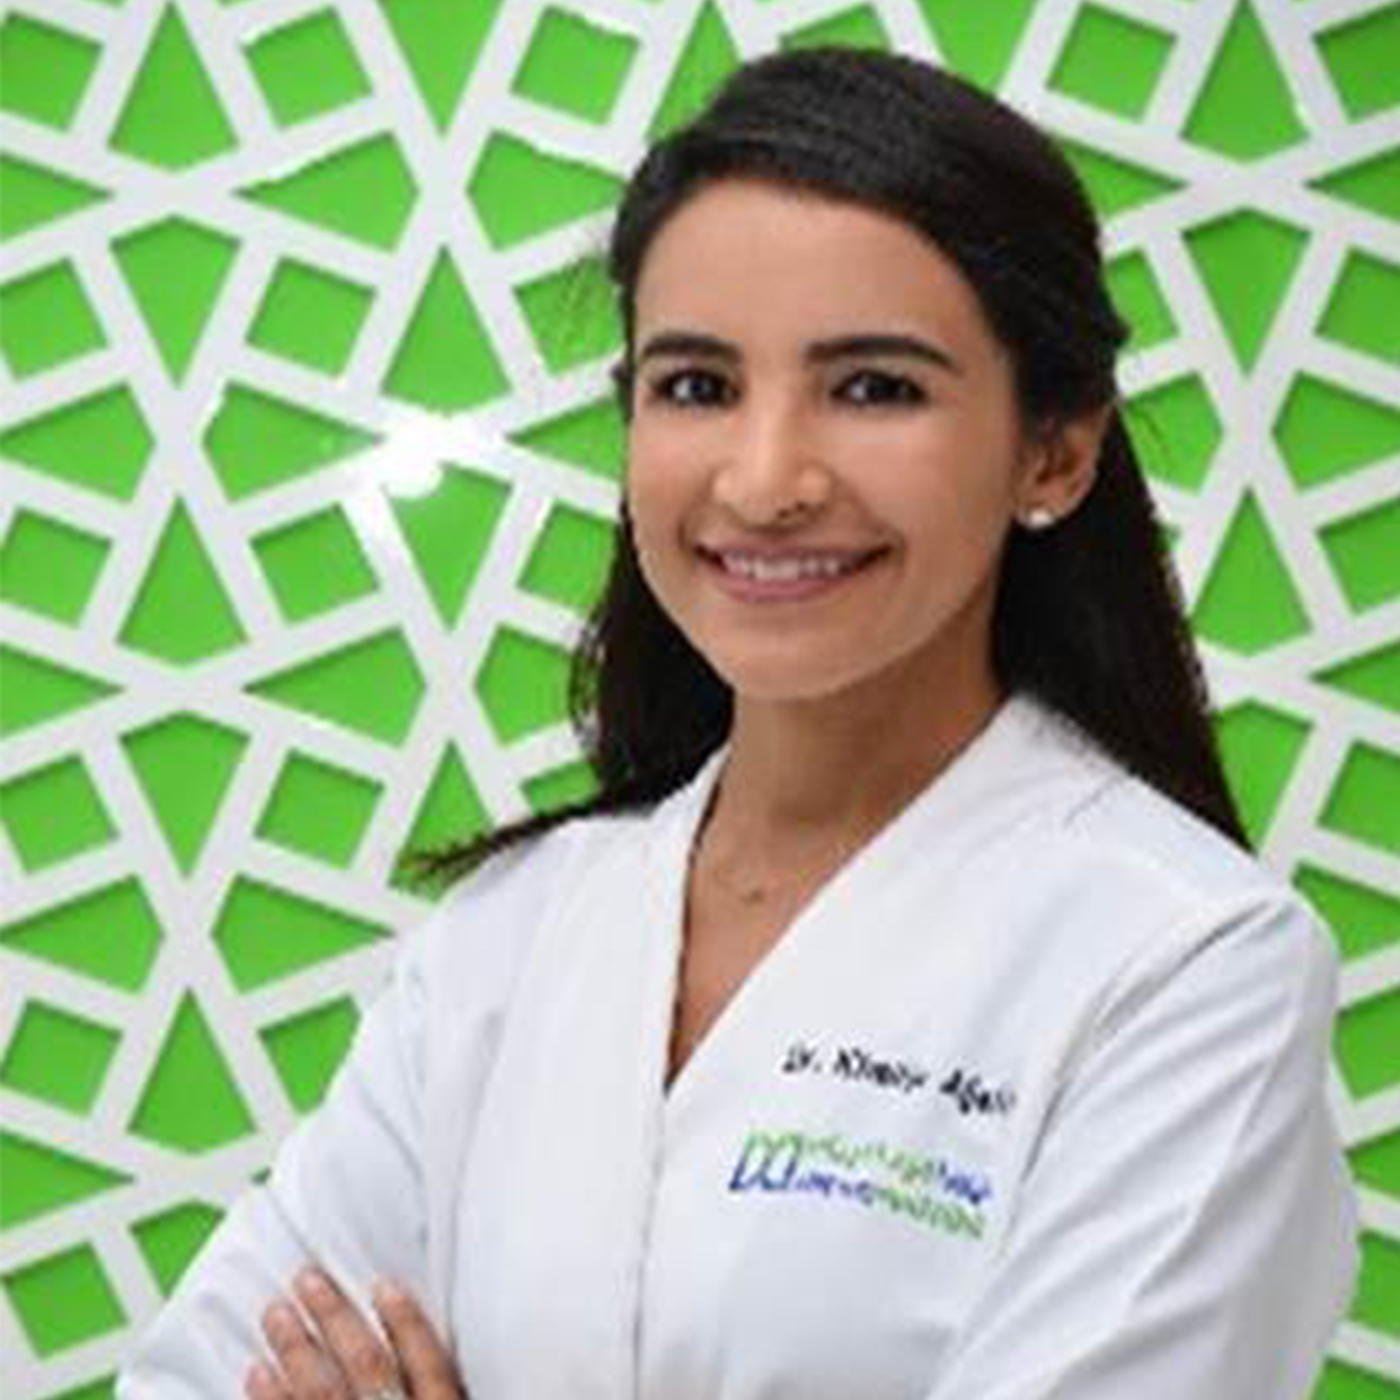 Dr Khadija Aljefri, a British board-certified consultant dermatologist